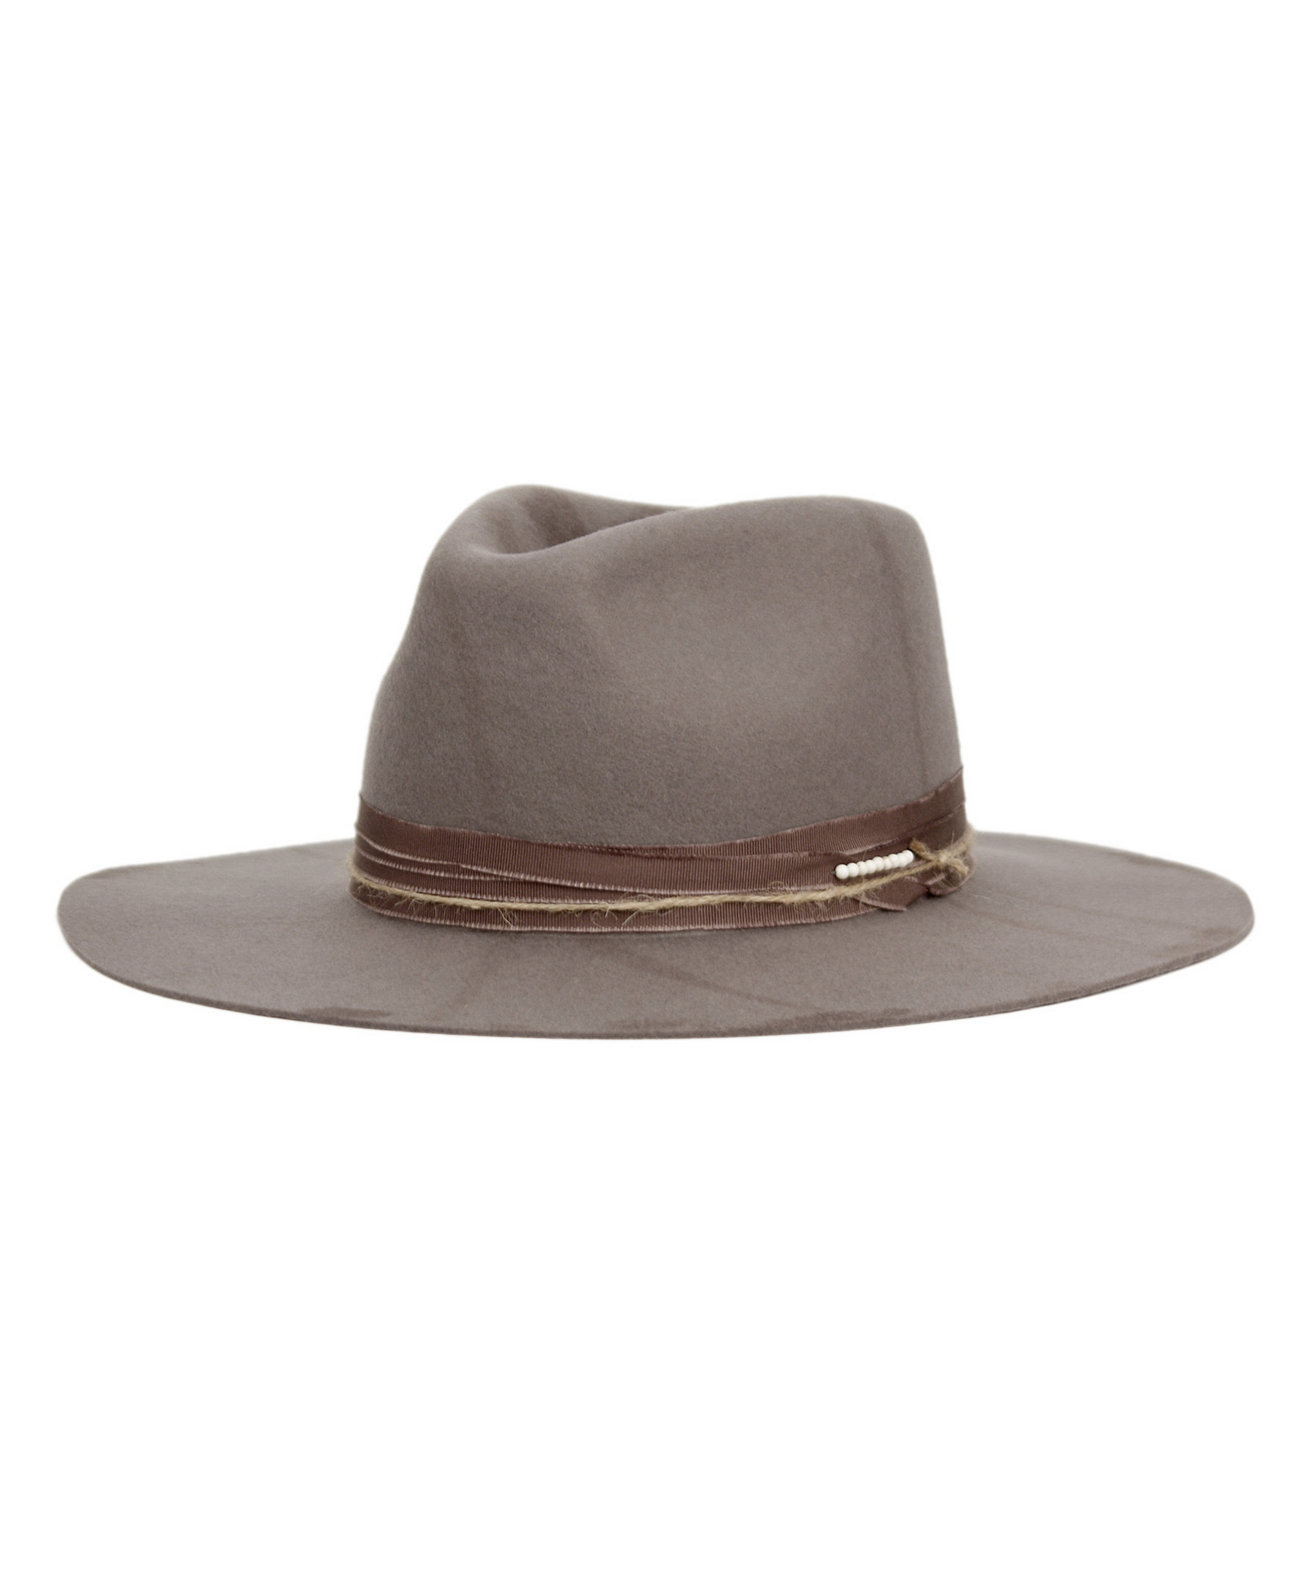 Vintage-Like Felt Fedora Ranch Hat Angela & William